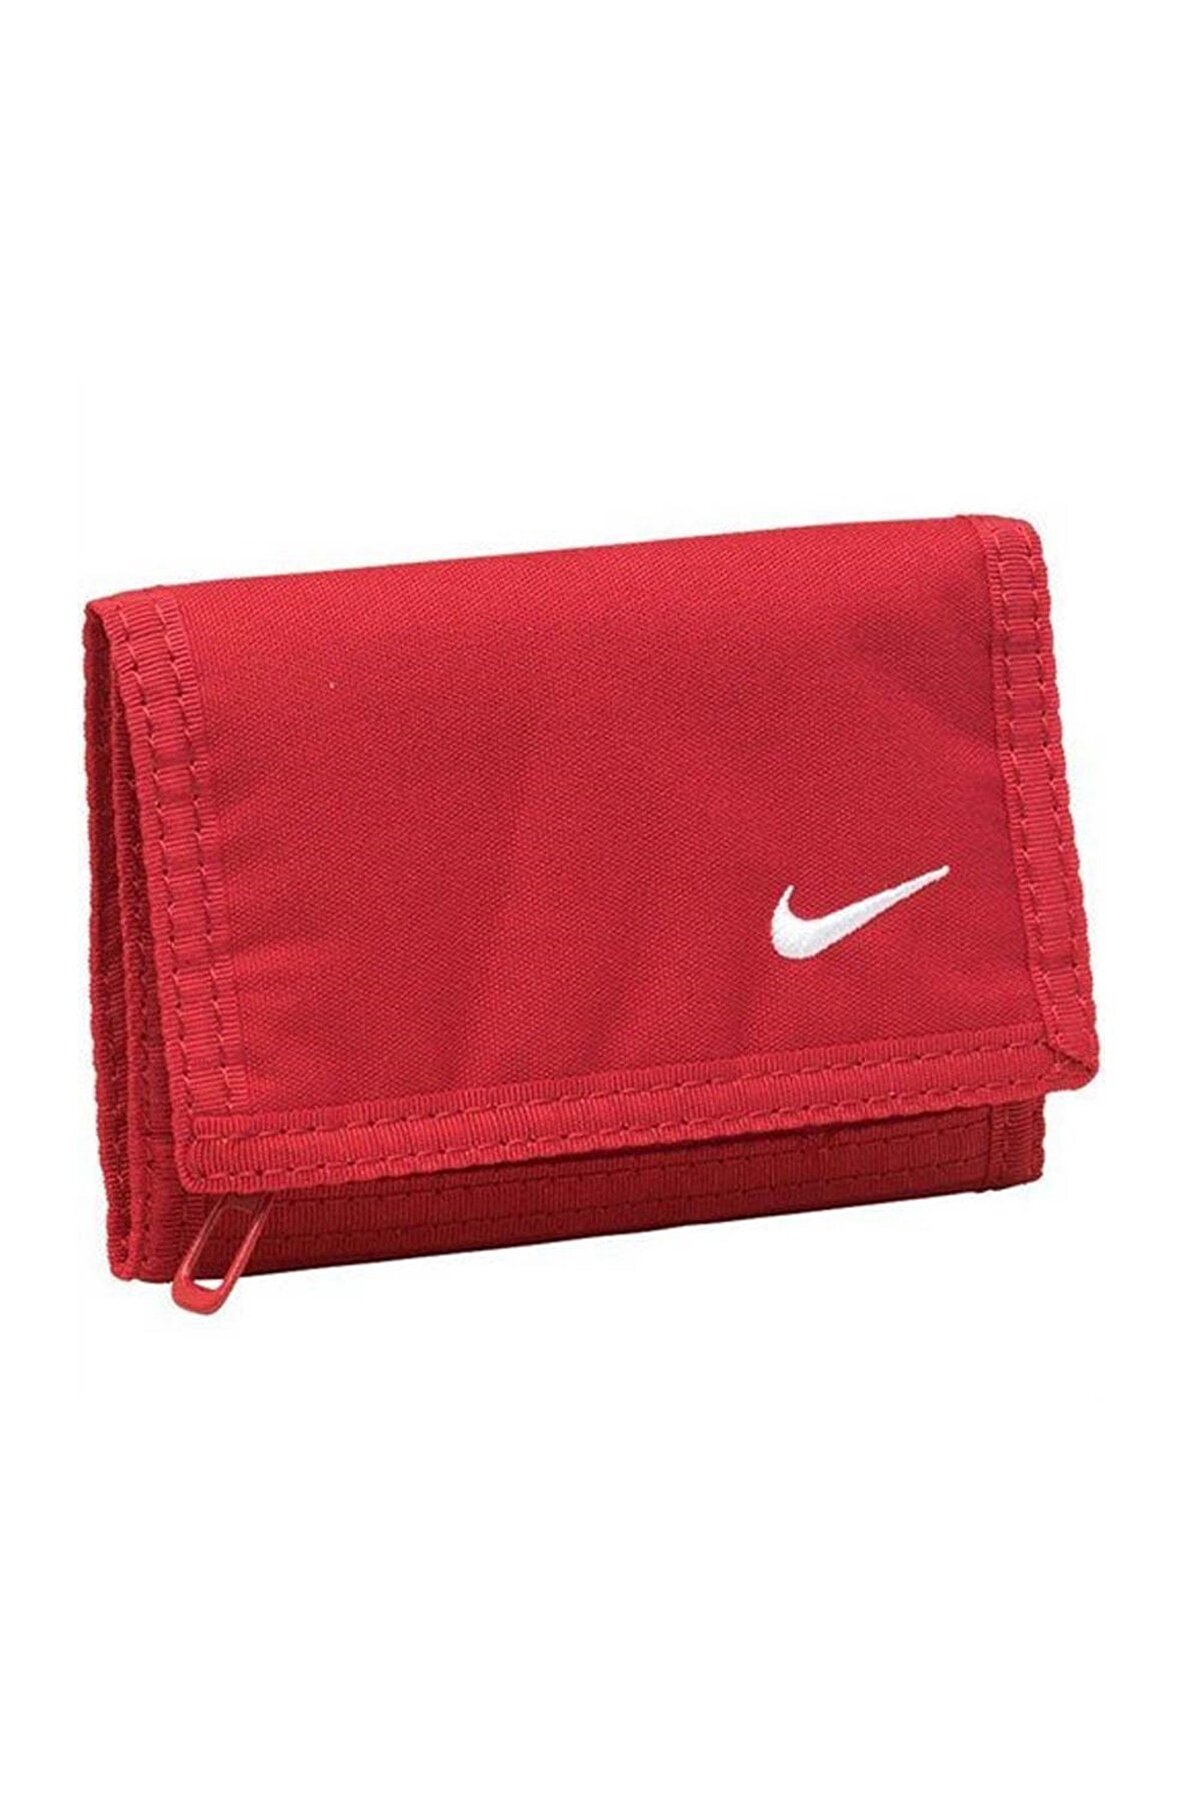 Nike Unisex Cüzdan - Basic Wallet36043-696 -